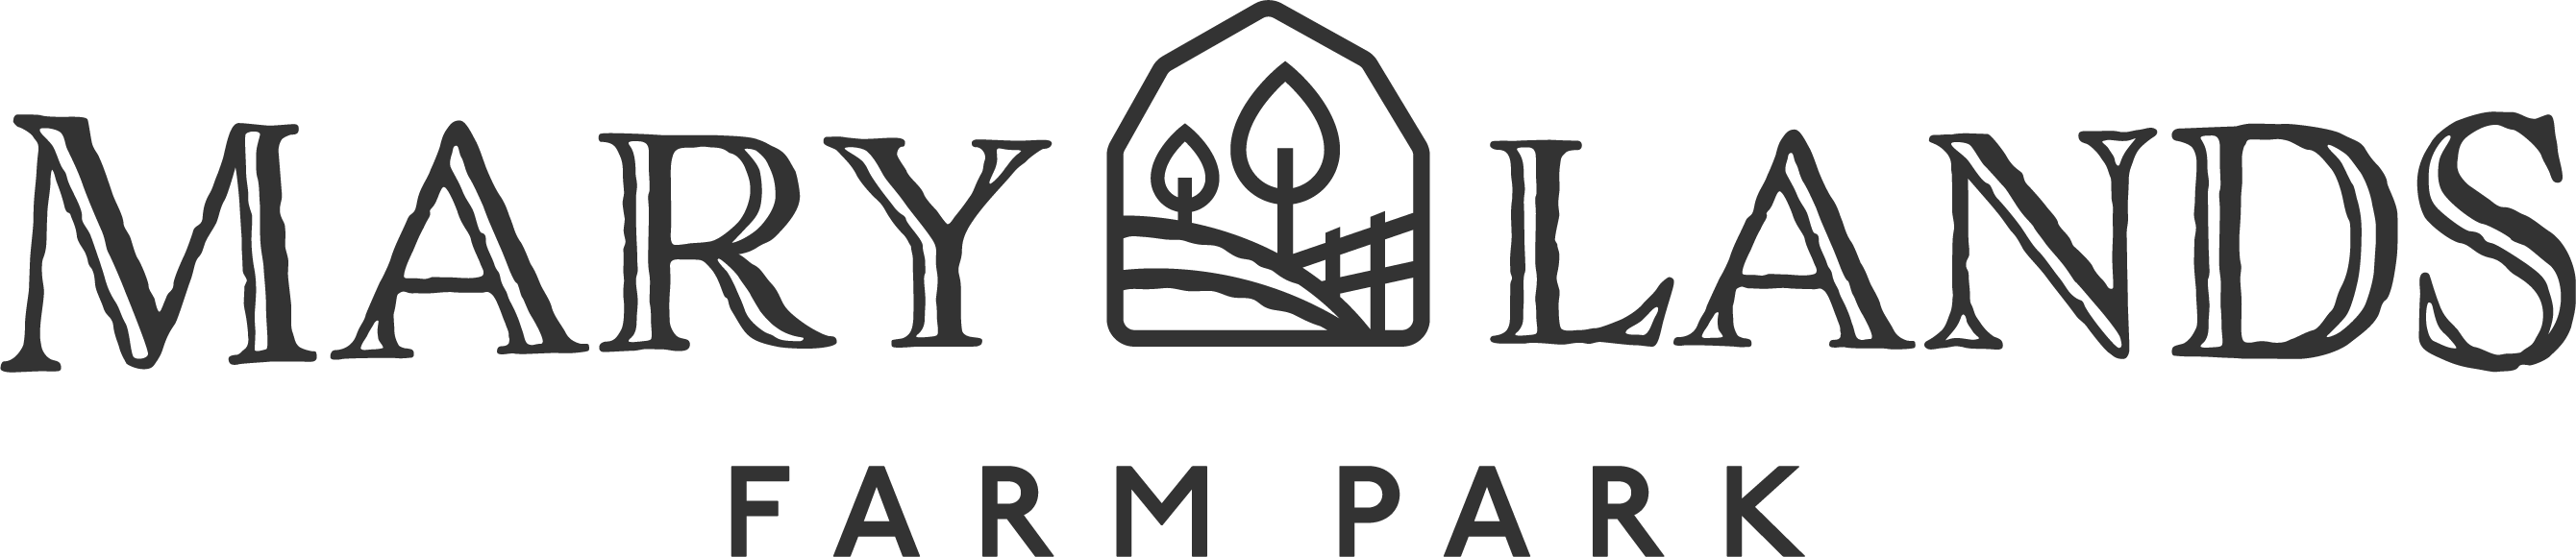 Black Marylands farm park logo